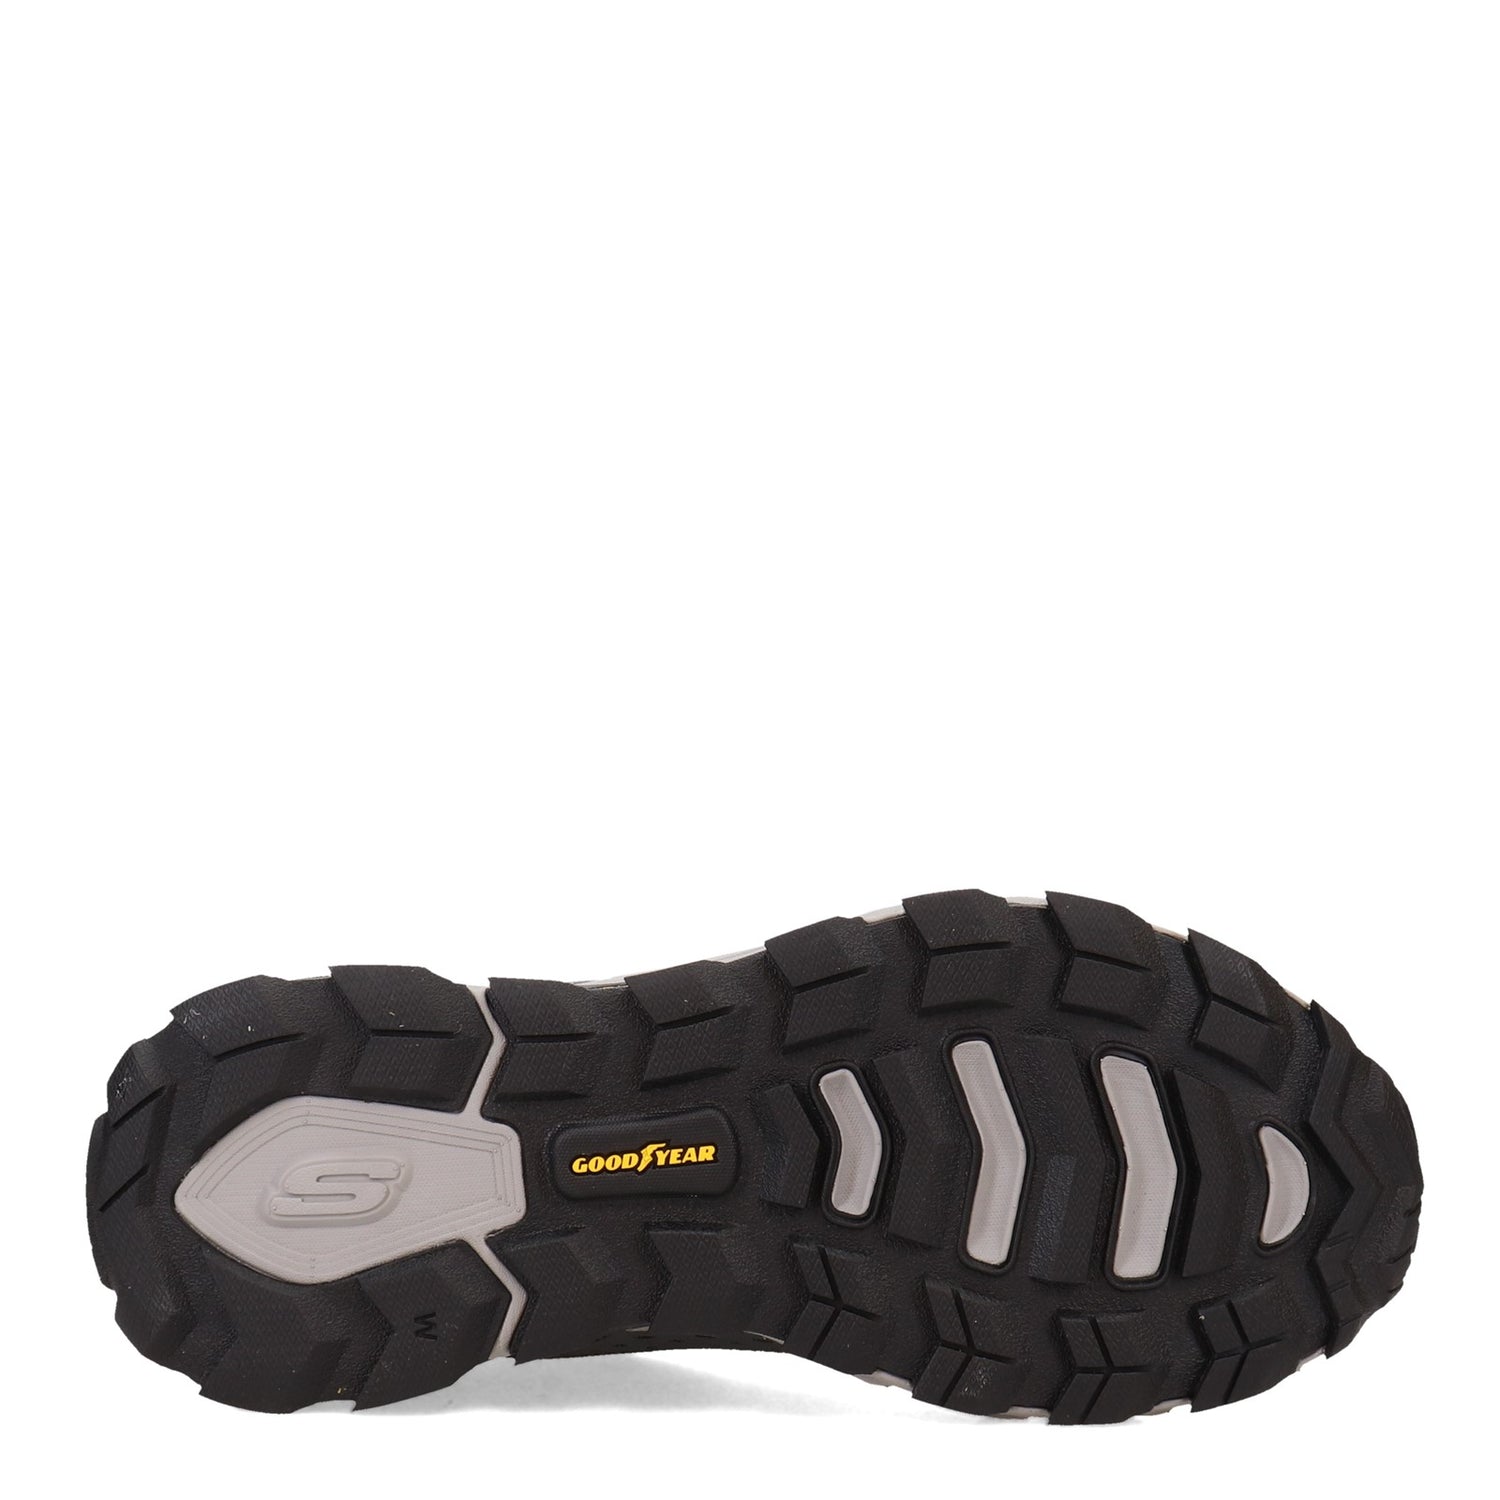 Peltz Shoes  Men's Skechers Max Protect Hiking Shoe - Wide Width Black/Charcoal 237303W-BKCC